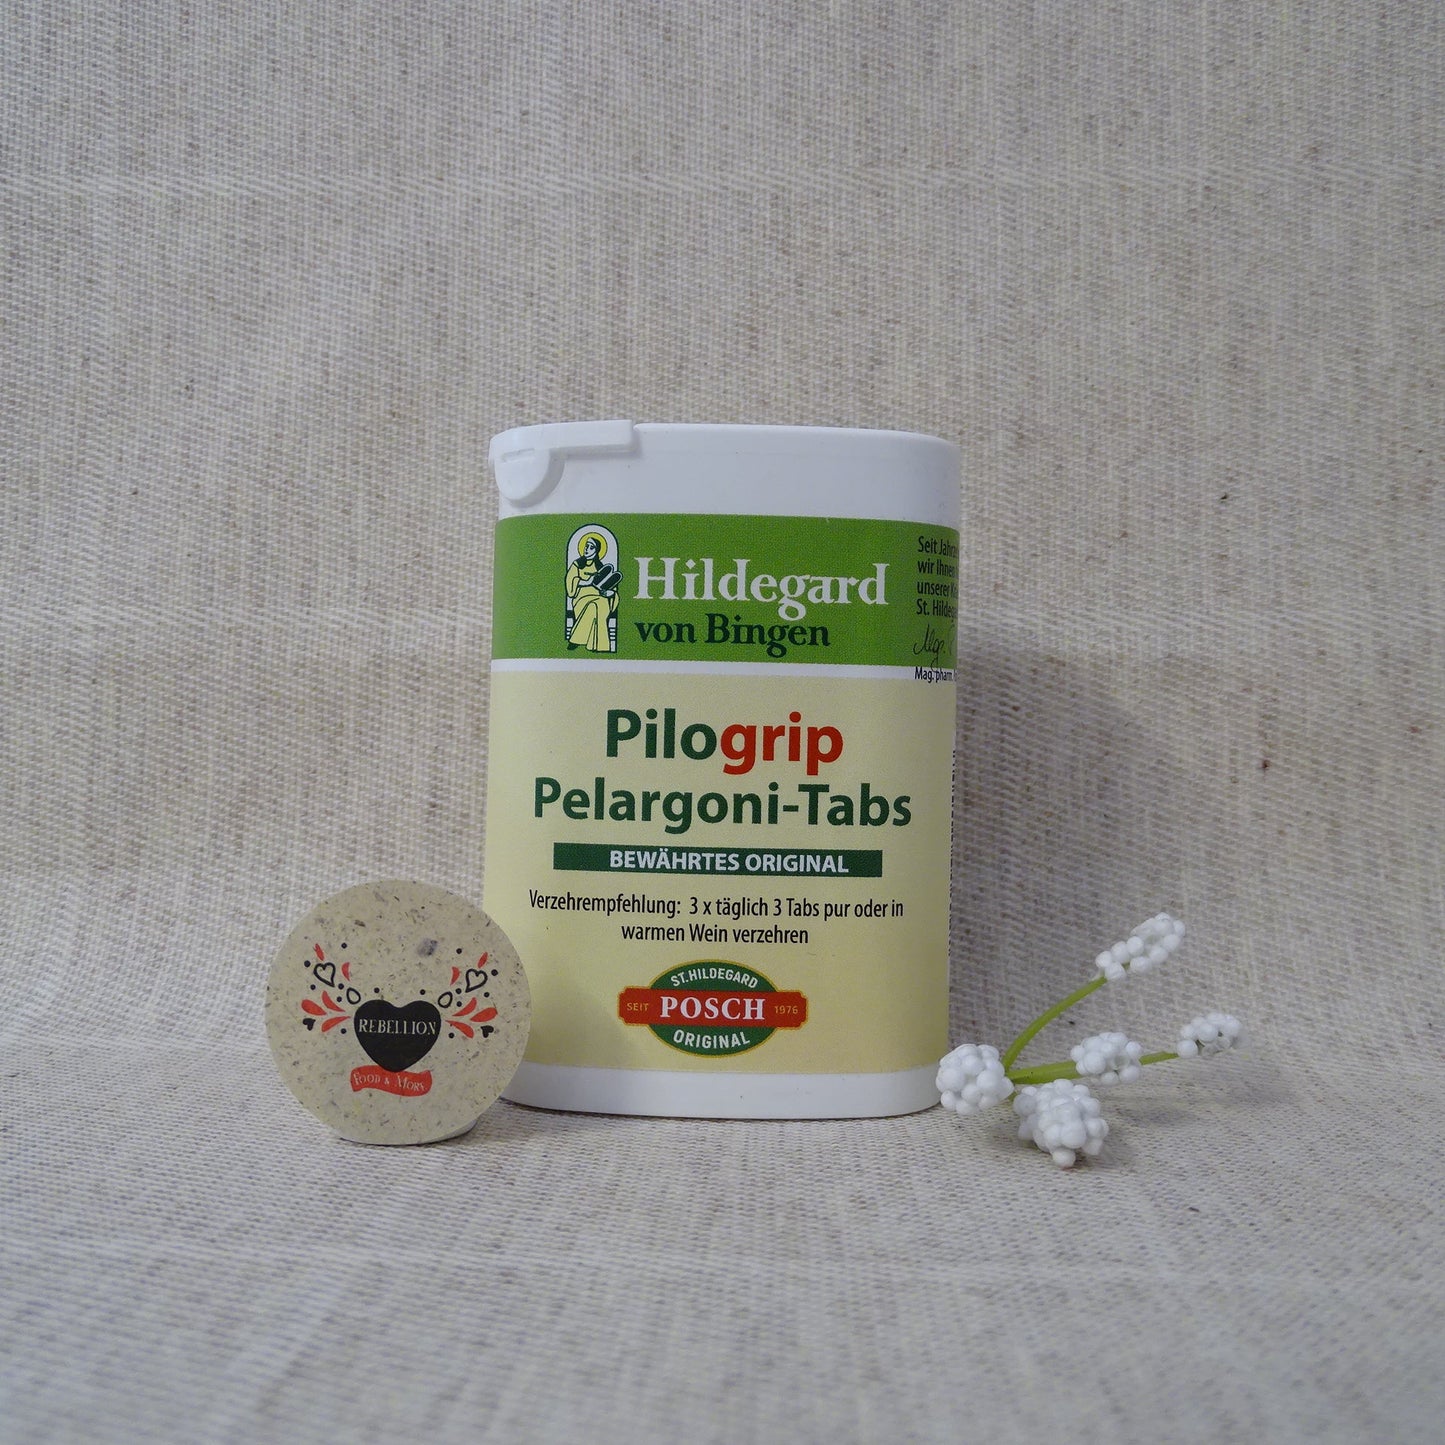 Pilogrip® Pelargoni-Tabs St.Hildegard Posch Dose da 70g